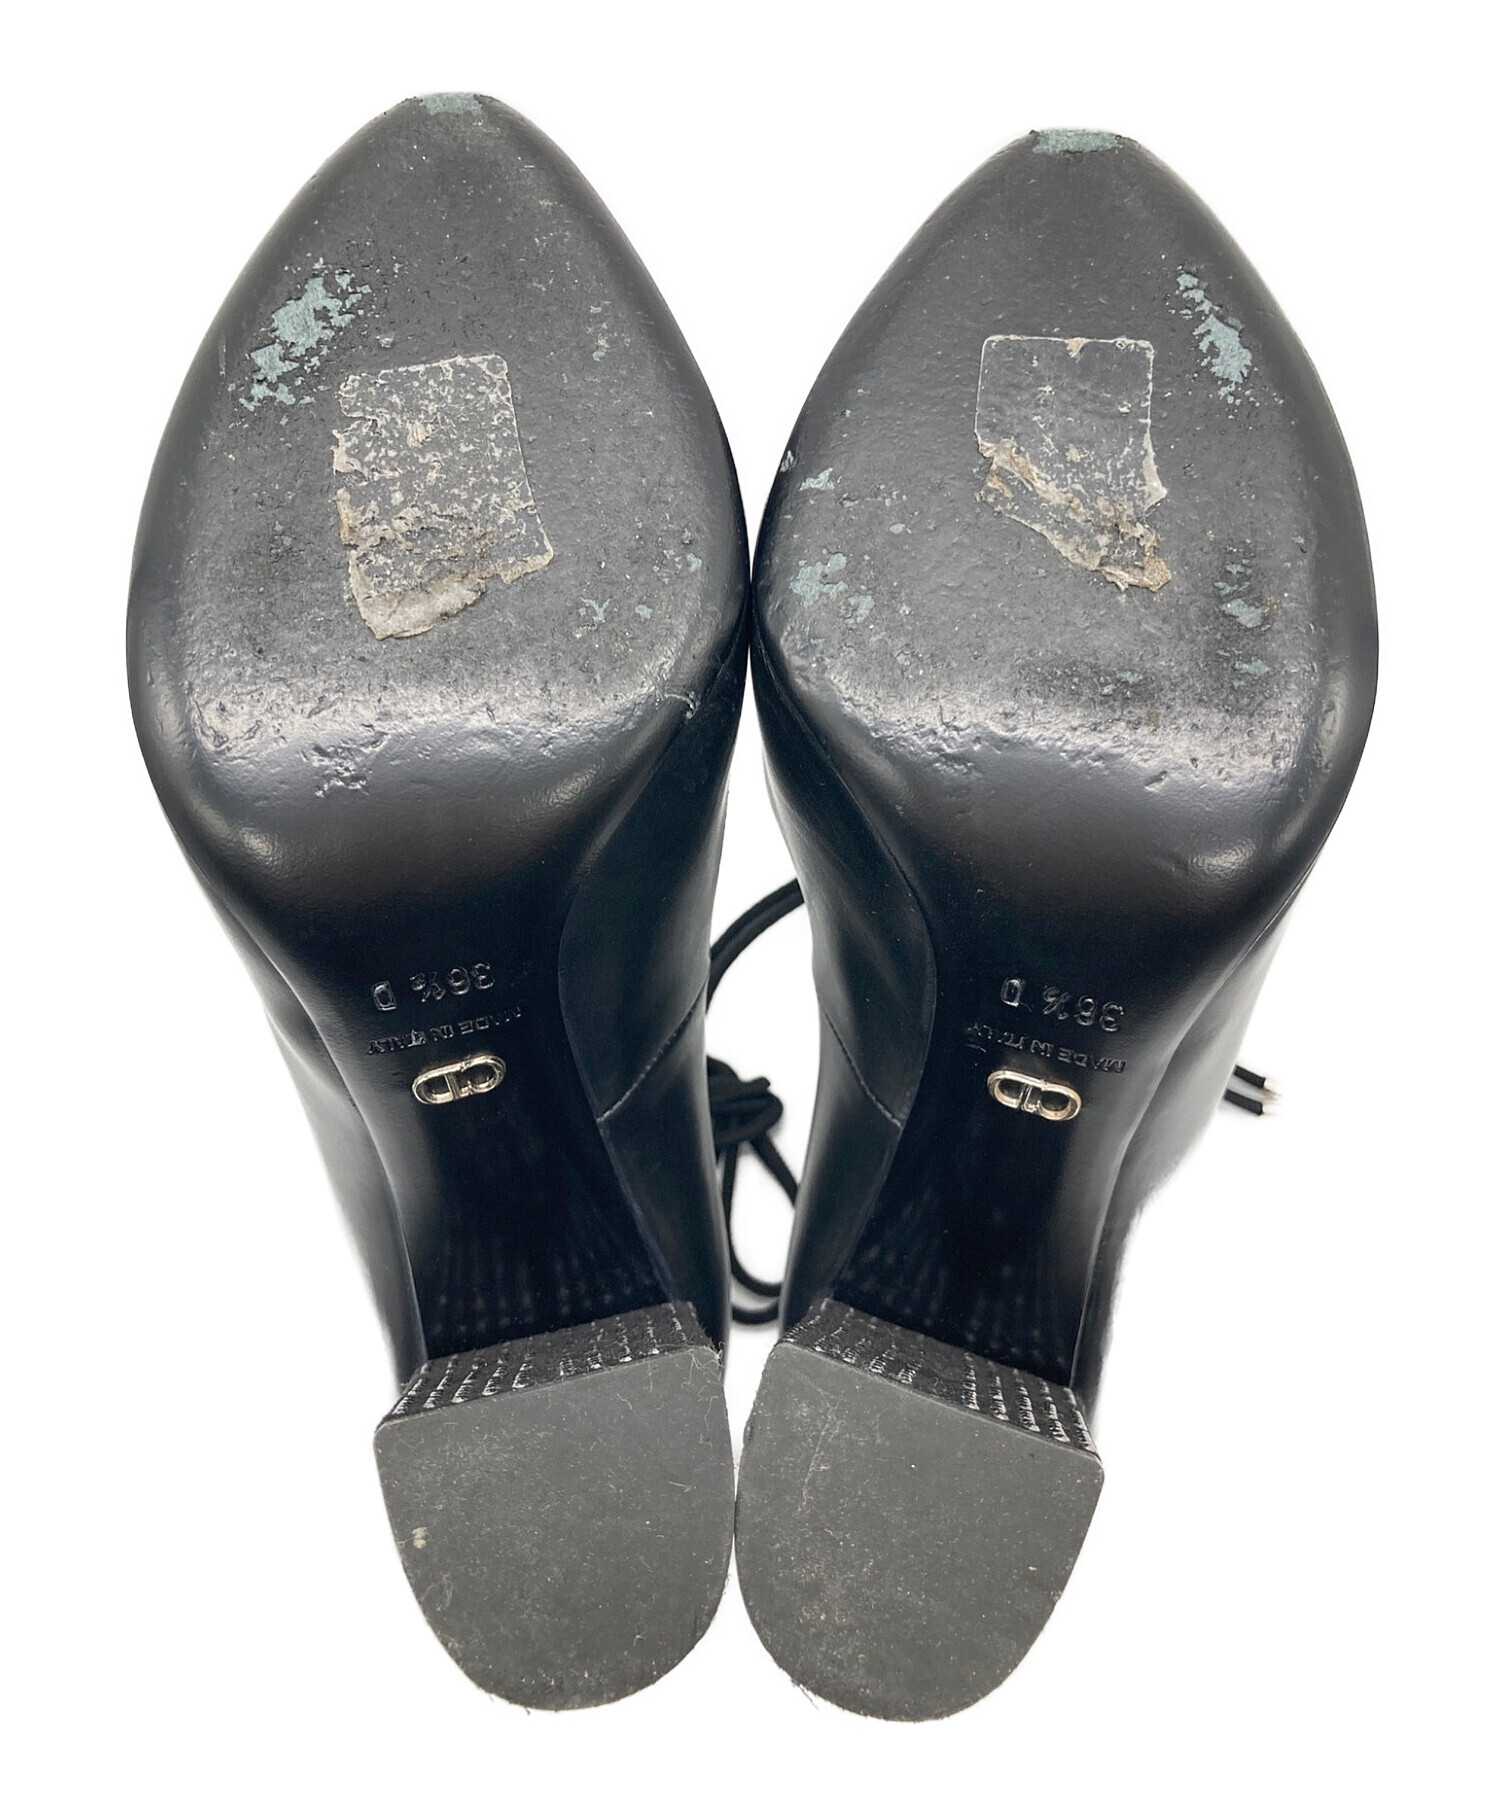 Christian Dior (クリスチャン ディオール) アンクルレースパンプス ブラック サイズ:36 1/2